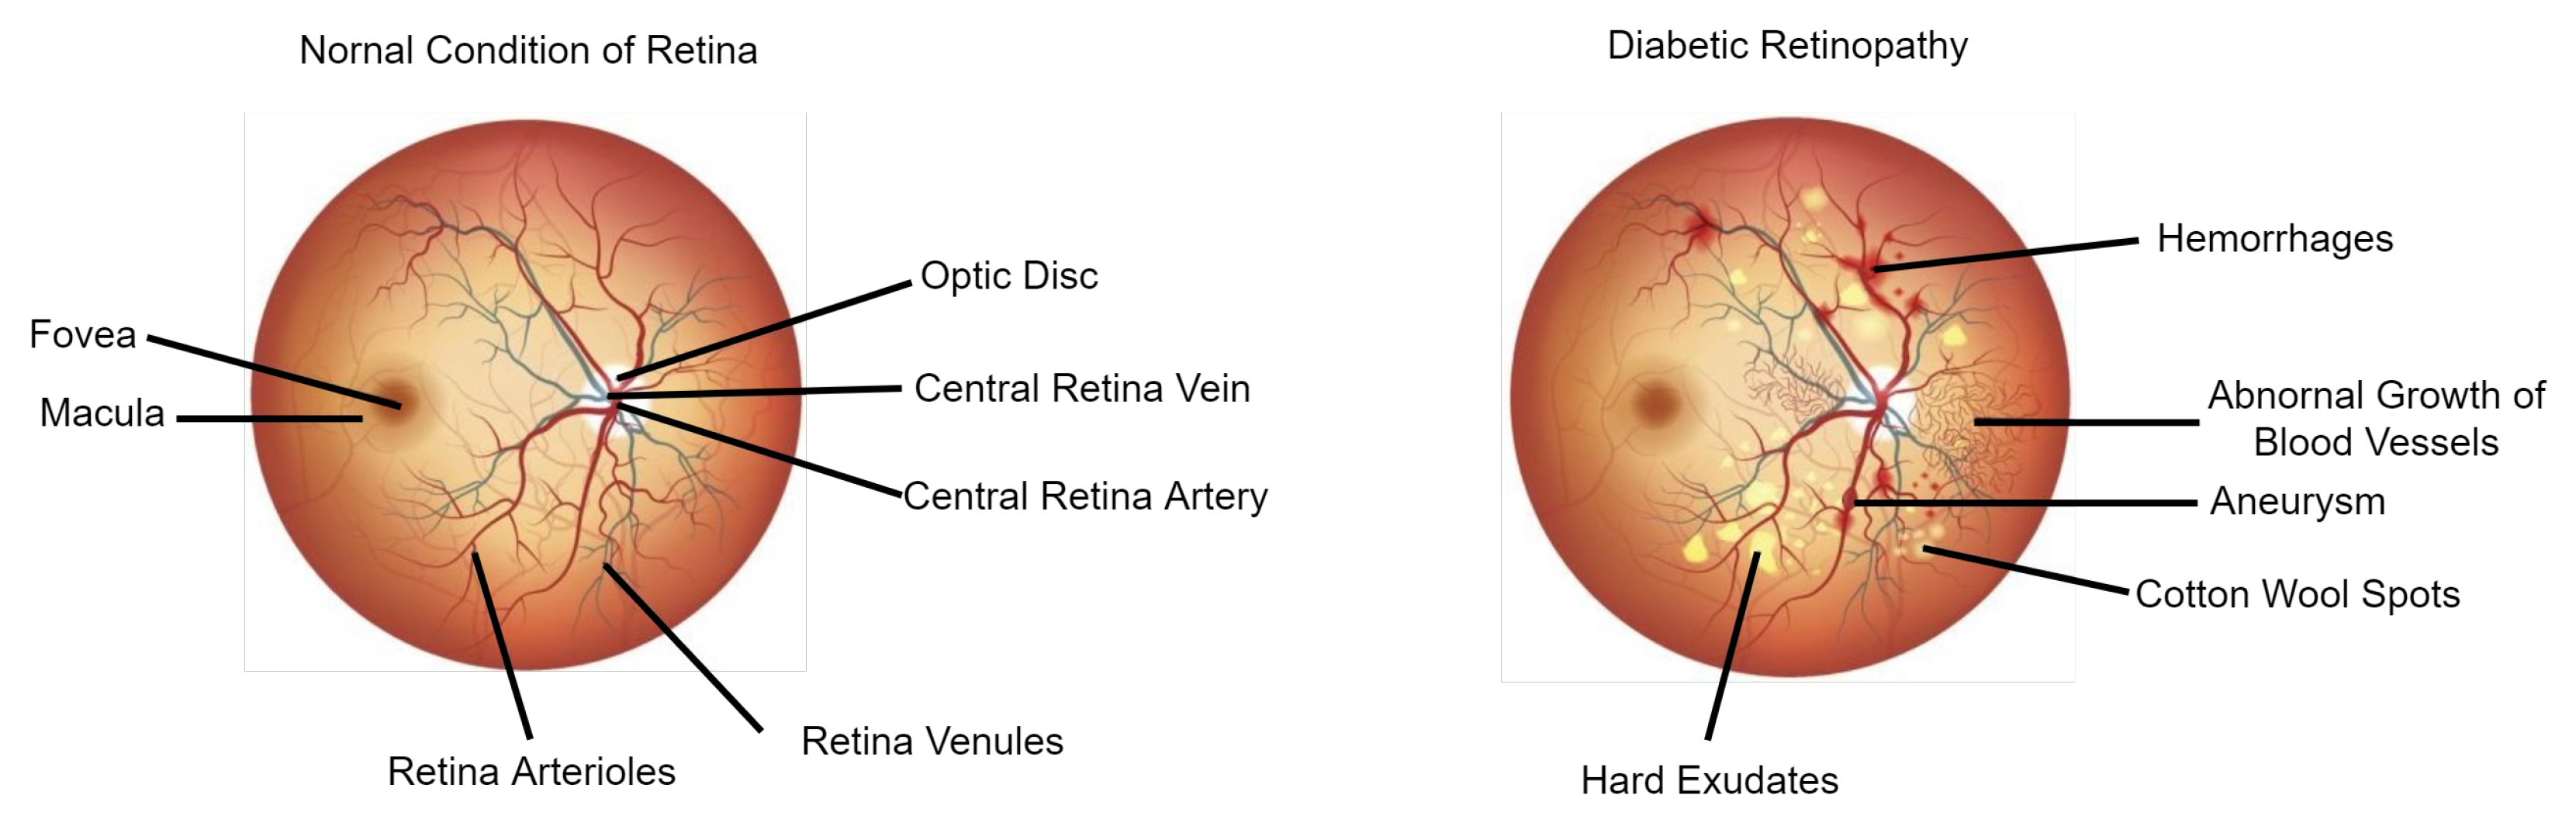 diabetic retinopathy research paper 2022